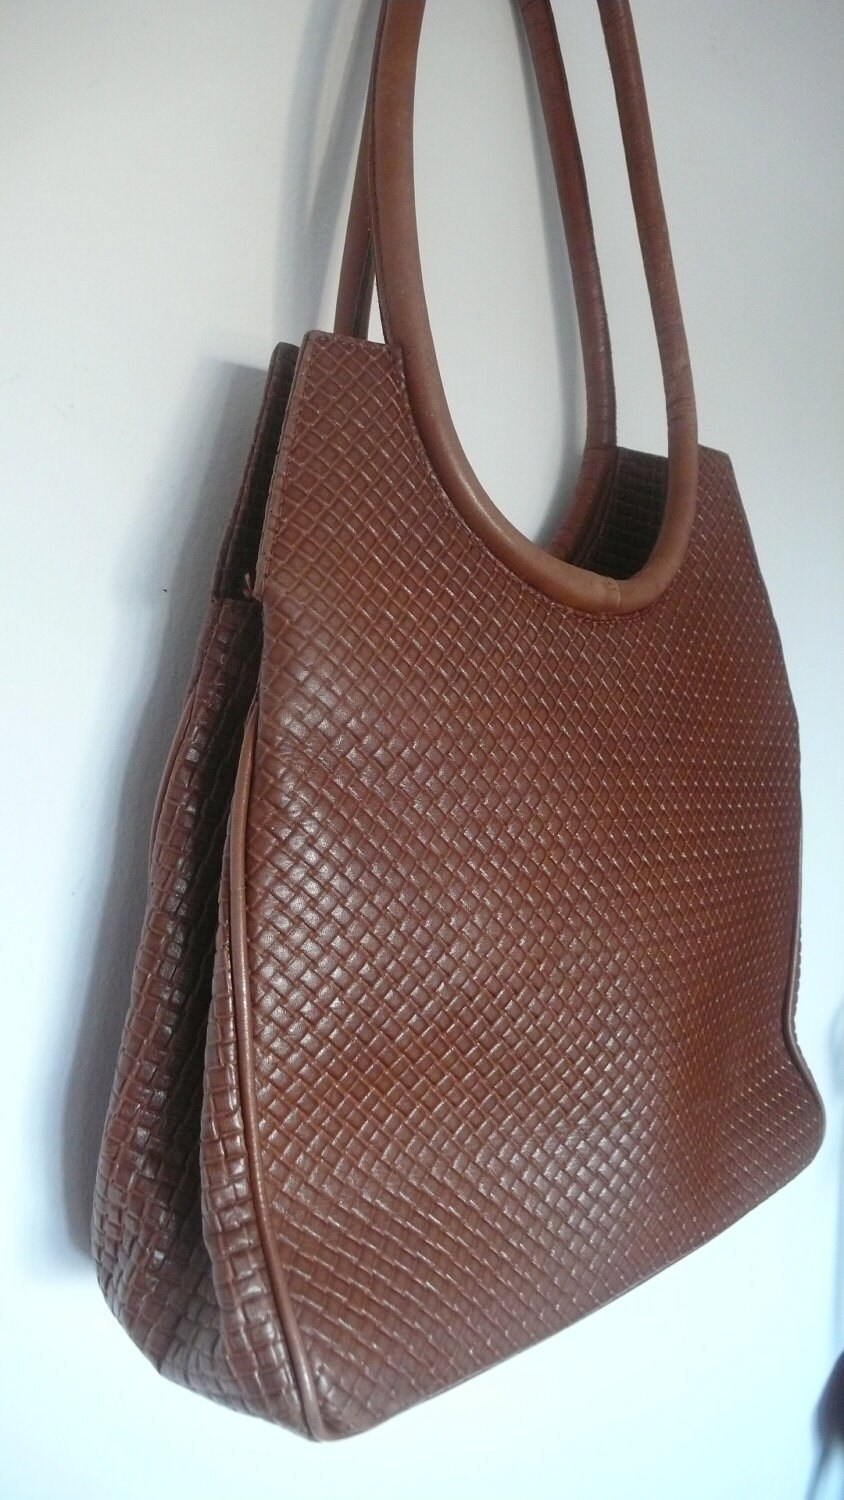 Caramel leather handbag Made in Spain vintage leather